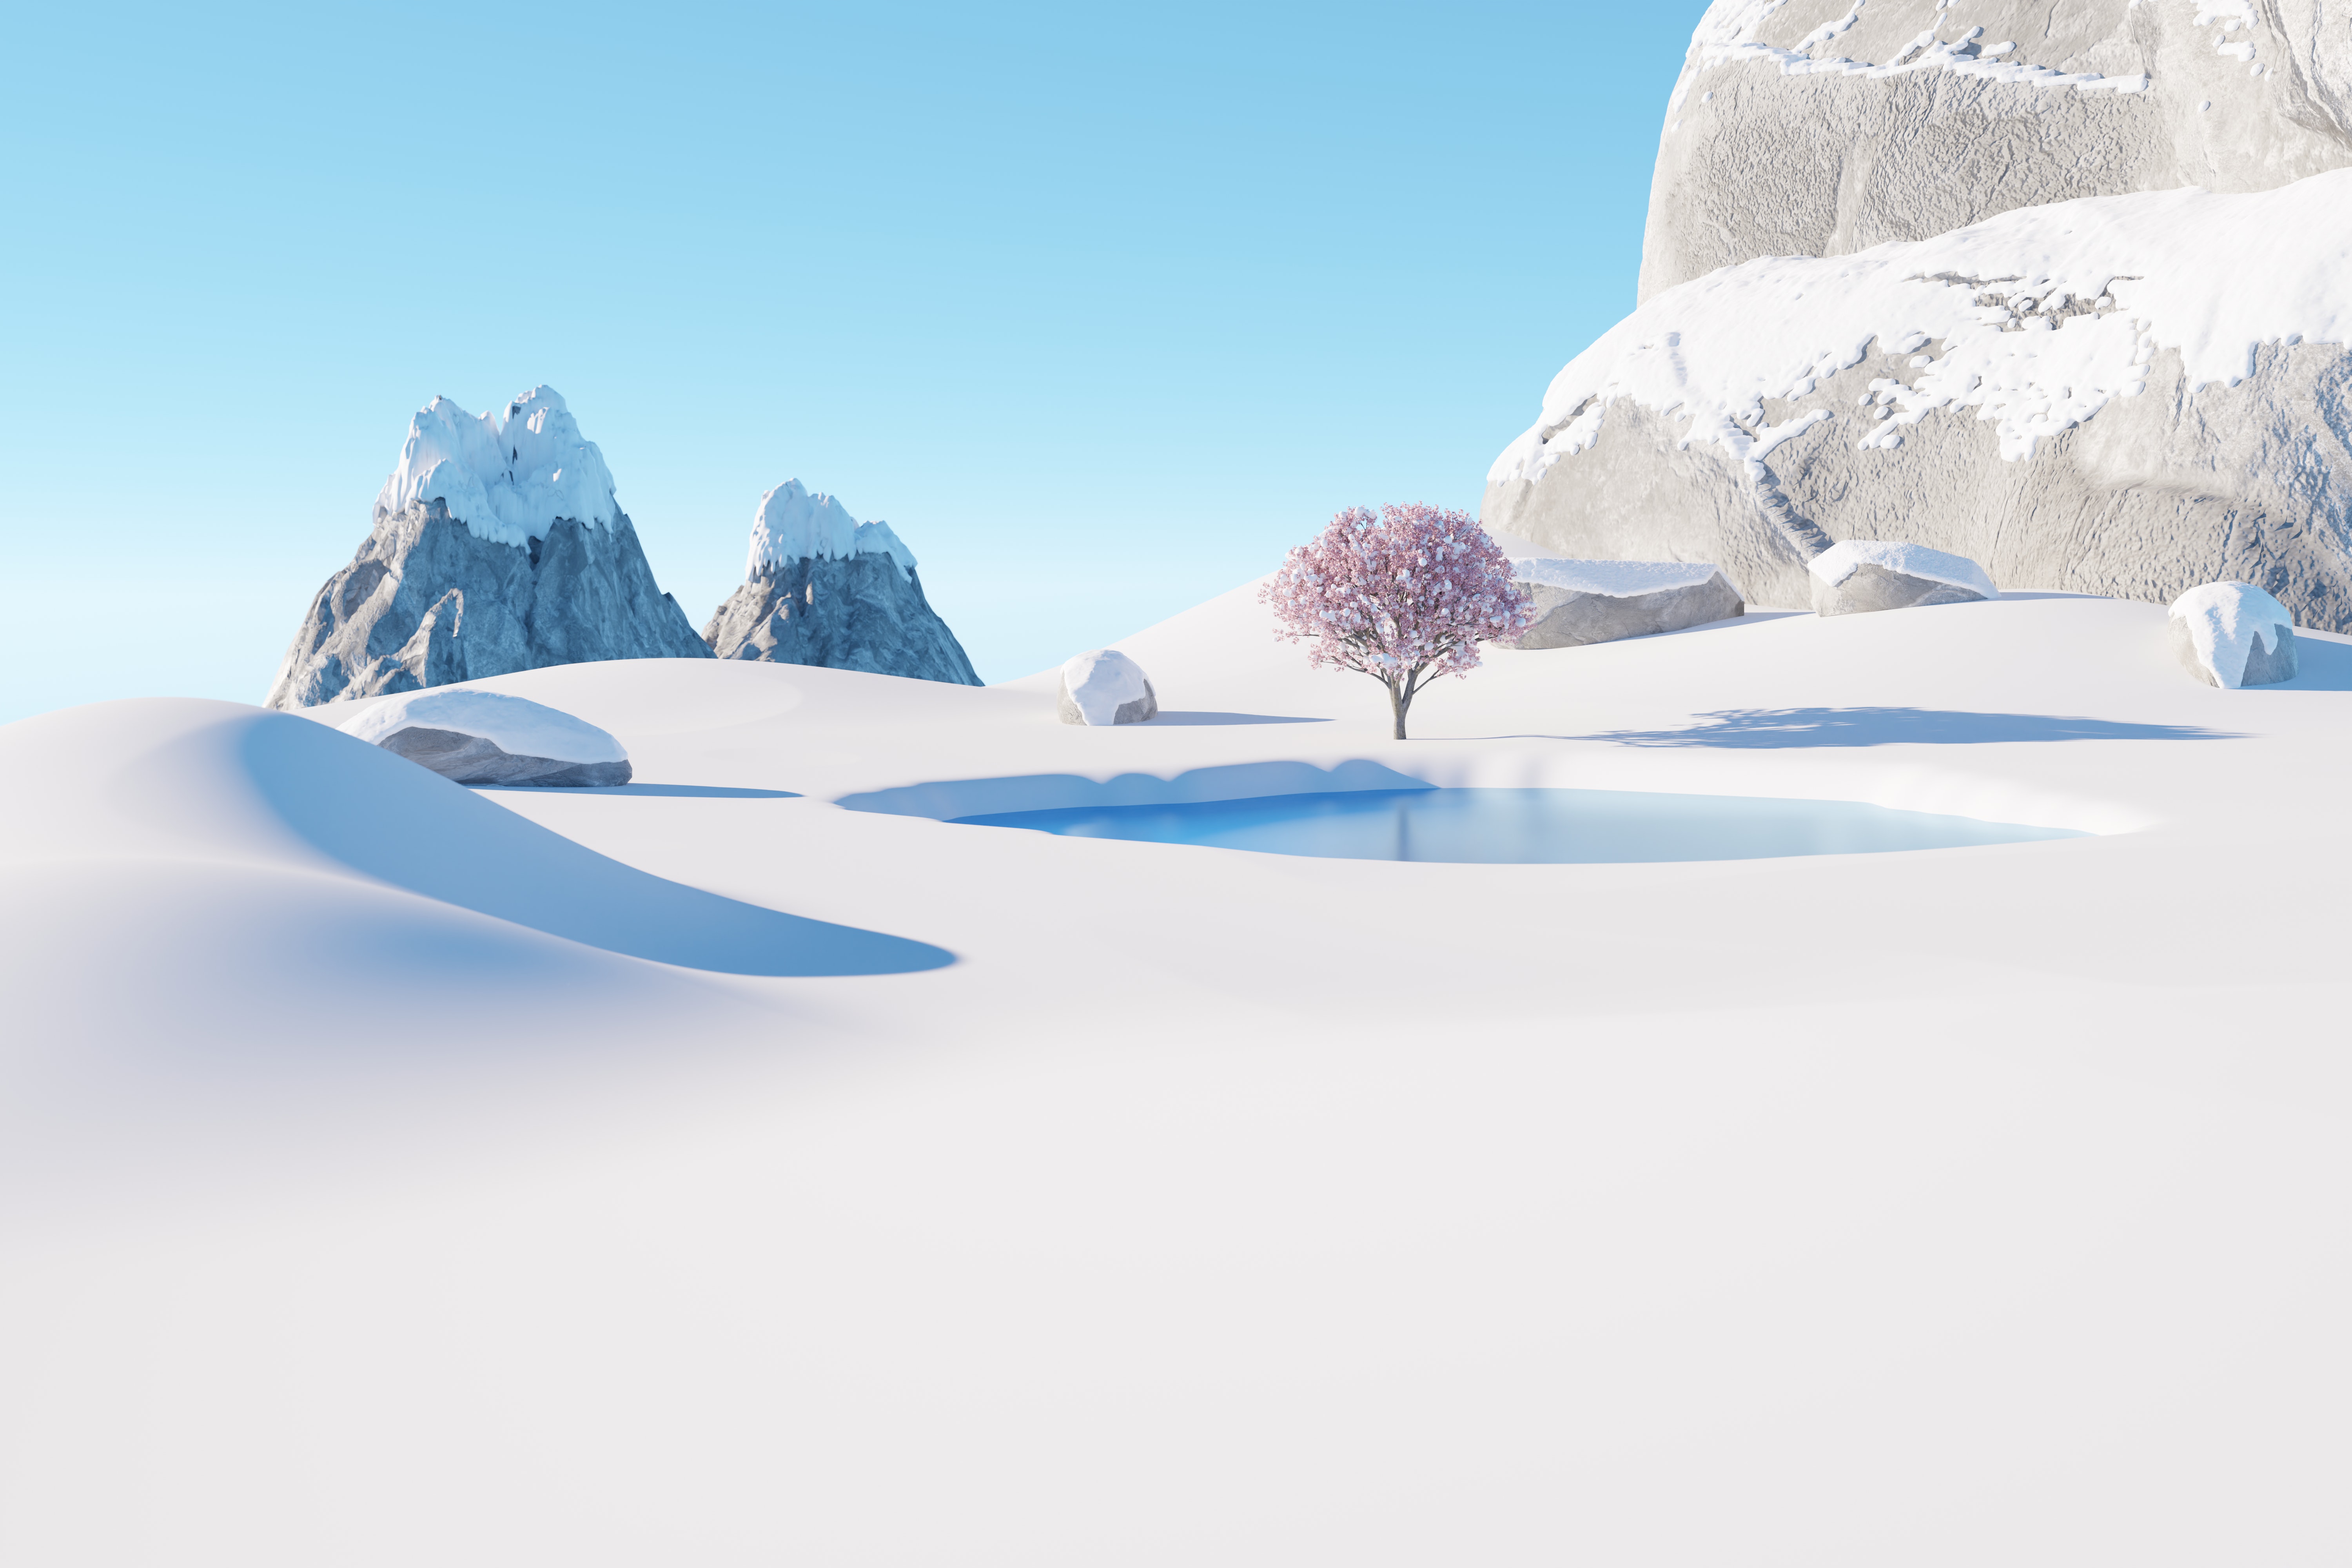 Digital Digital Art Artwork Render 3D Minimalism Nature Landscape Snow Ice Trees Lake Mountains Whit 6000x4000